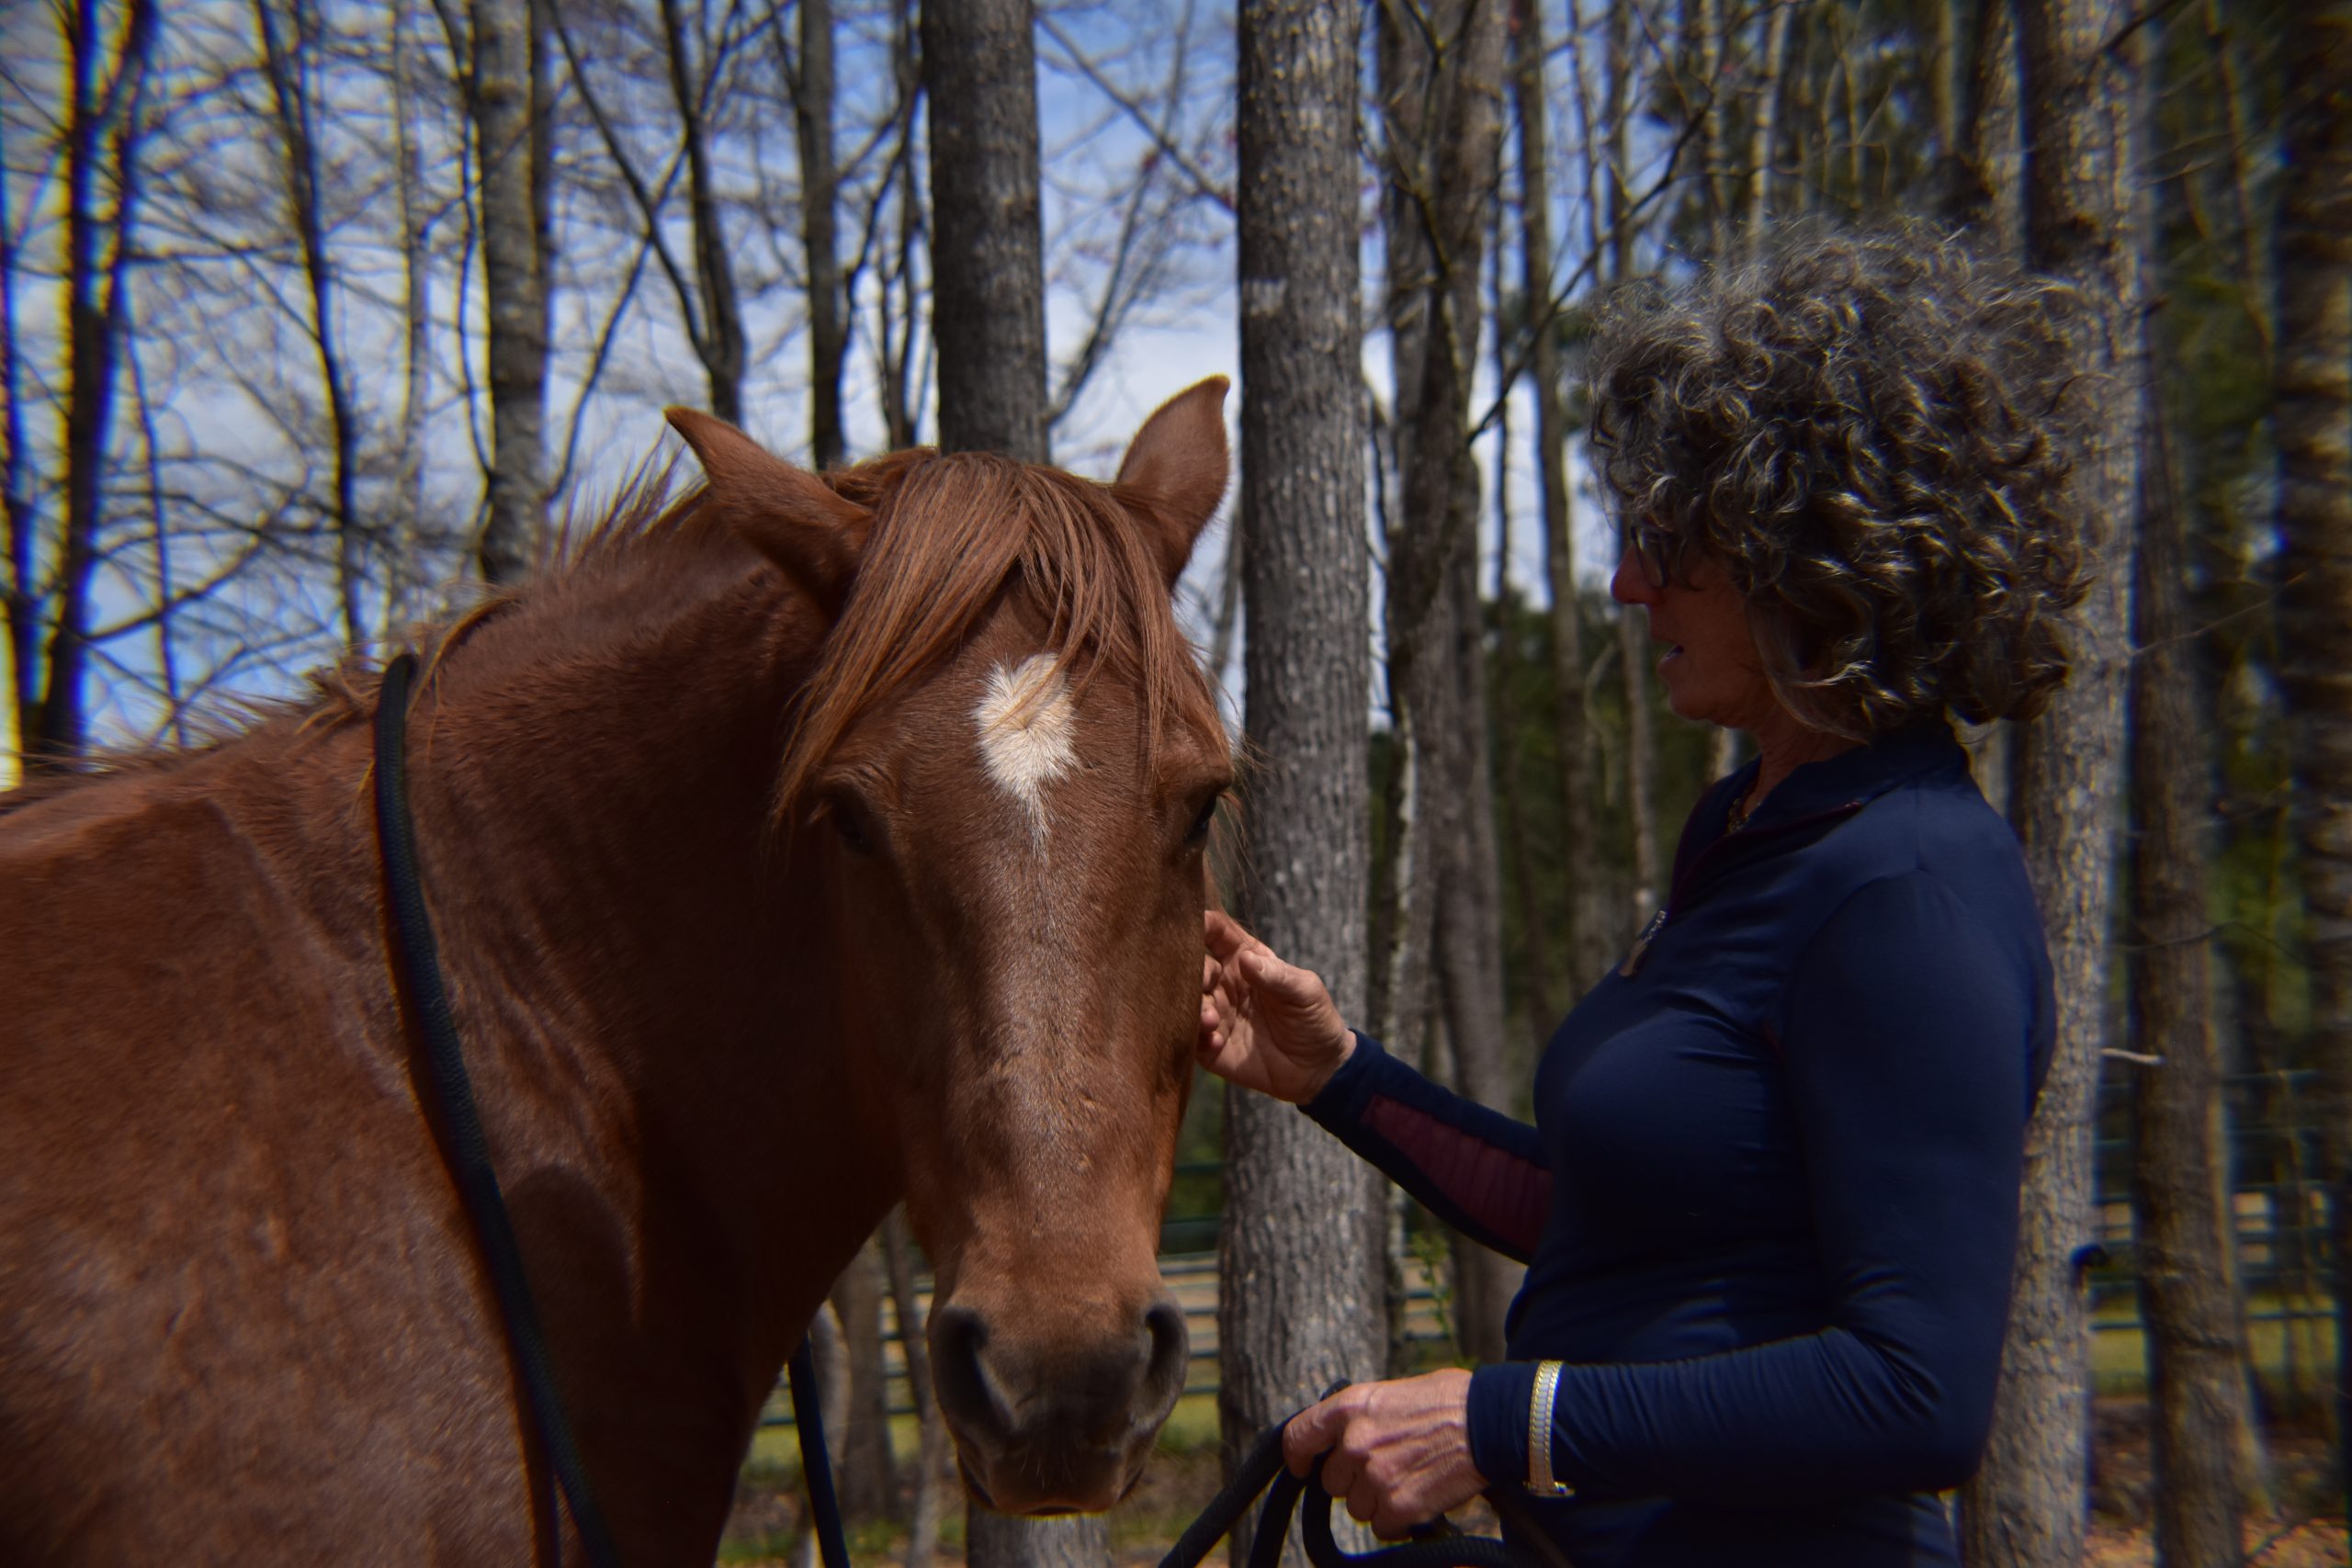 Joan petting a chestnut horse